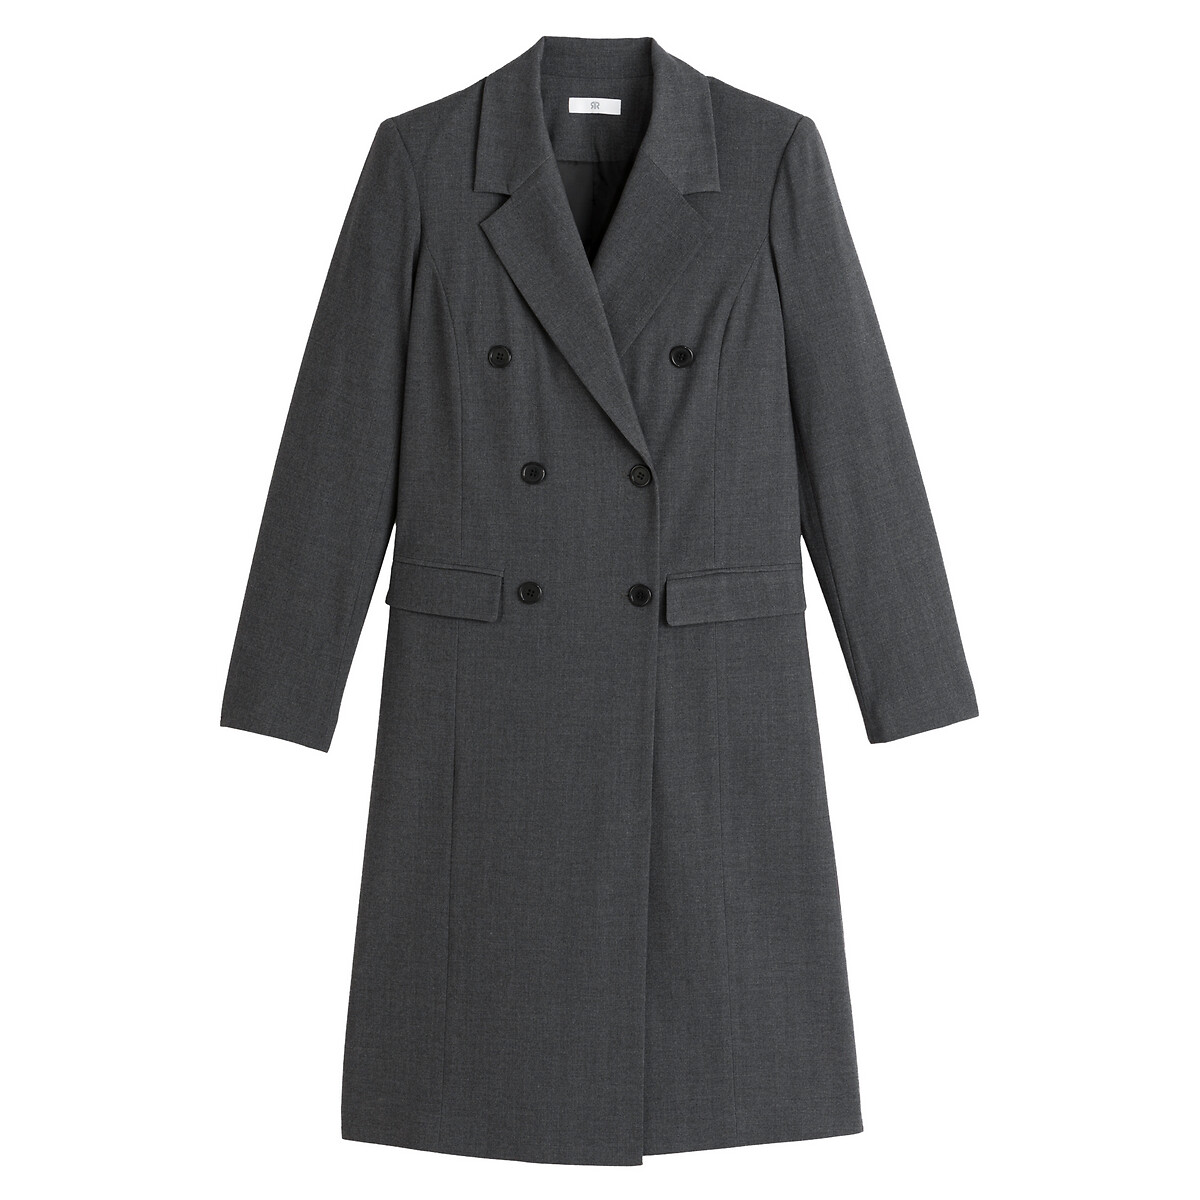 M Zara Grey Double Breasted Wool Coat Size XS S 